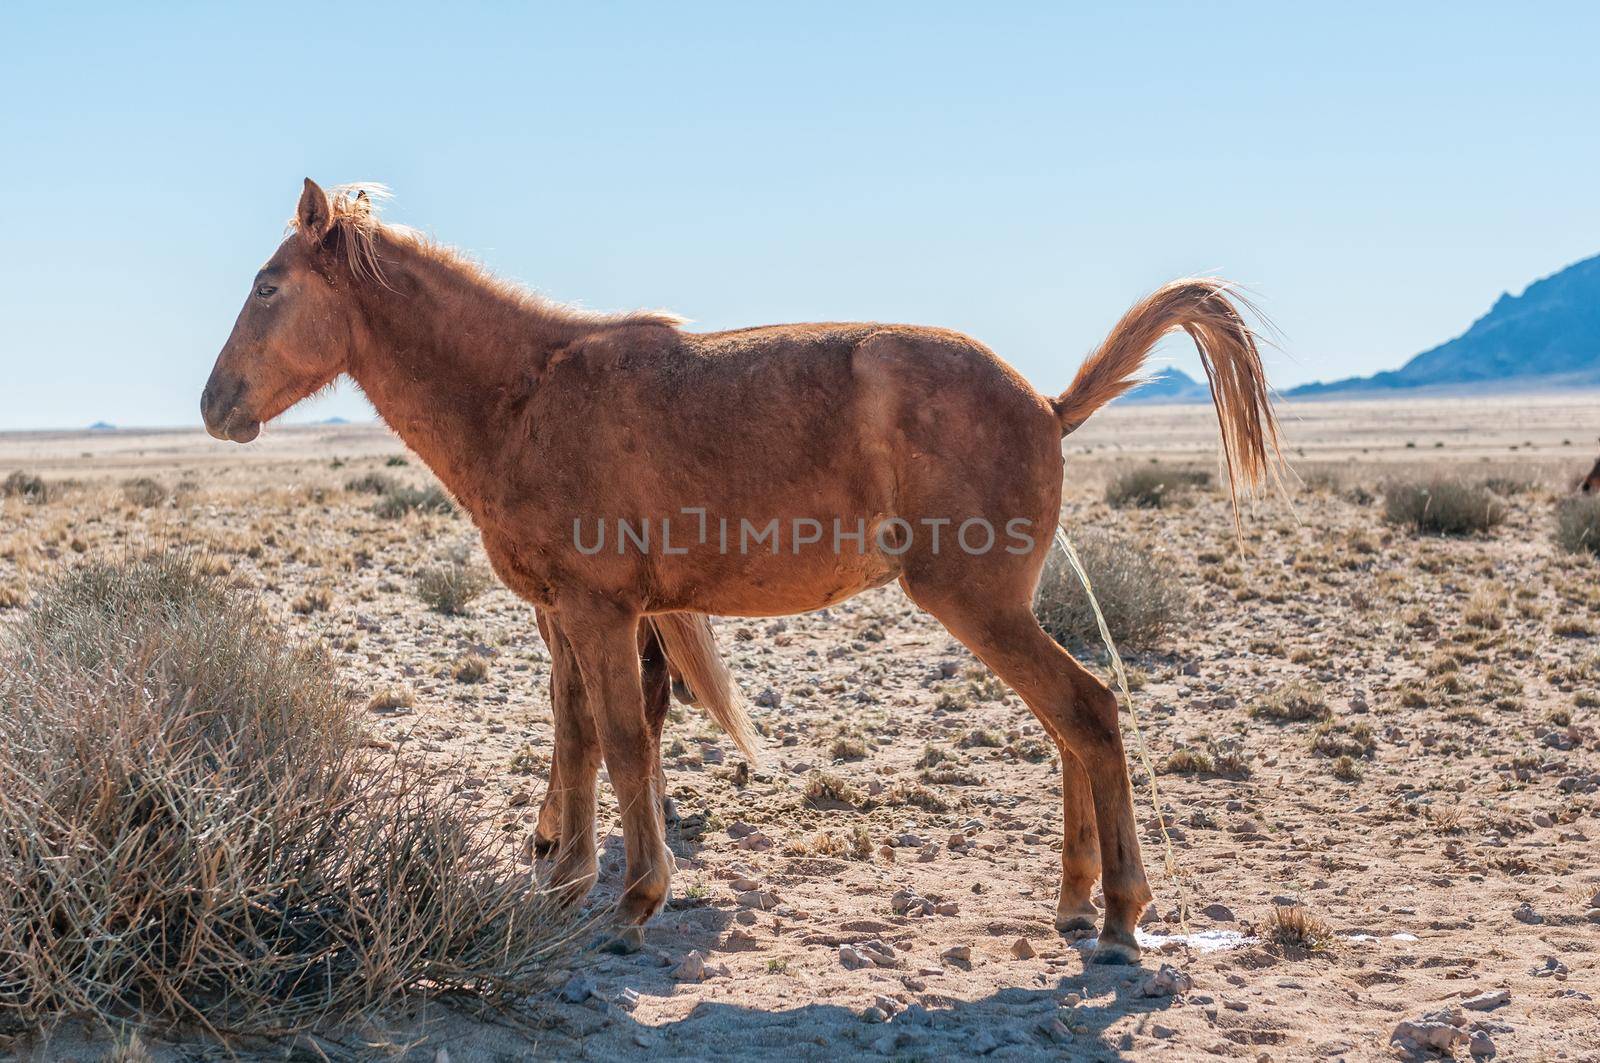 Wild horse of the Namib mare urinating. Photo taken at Garub